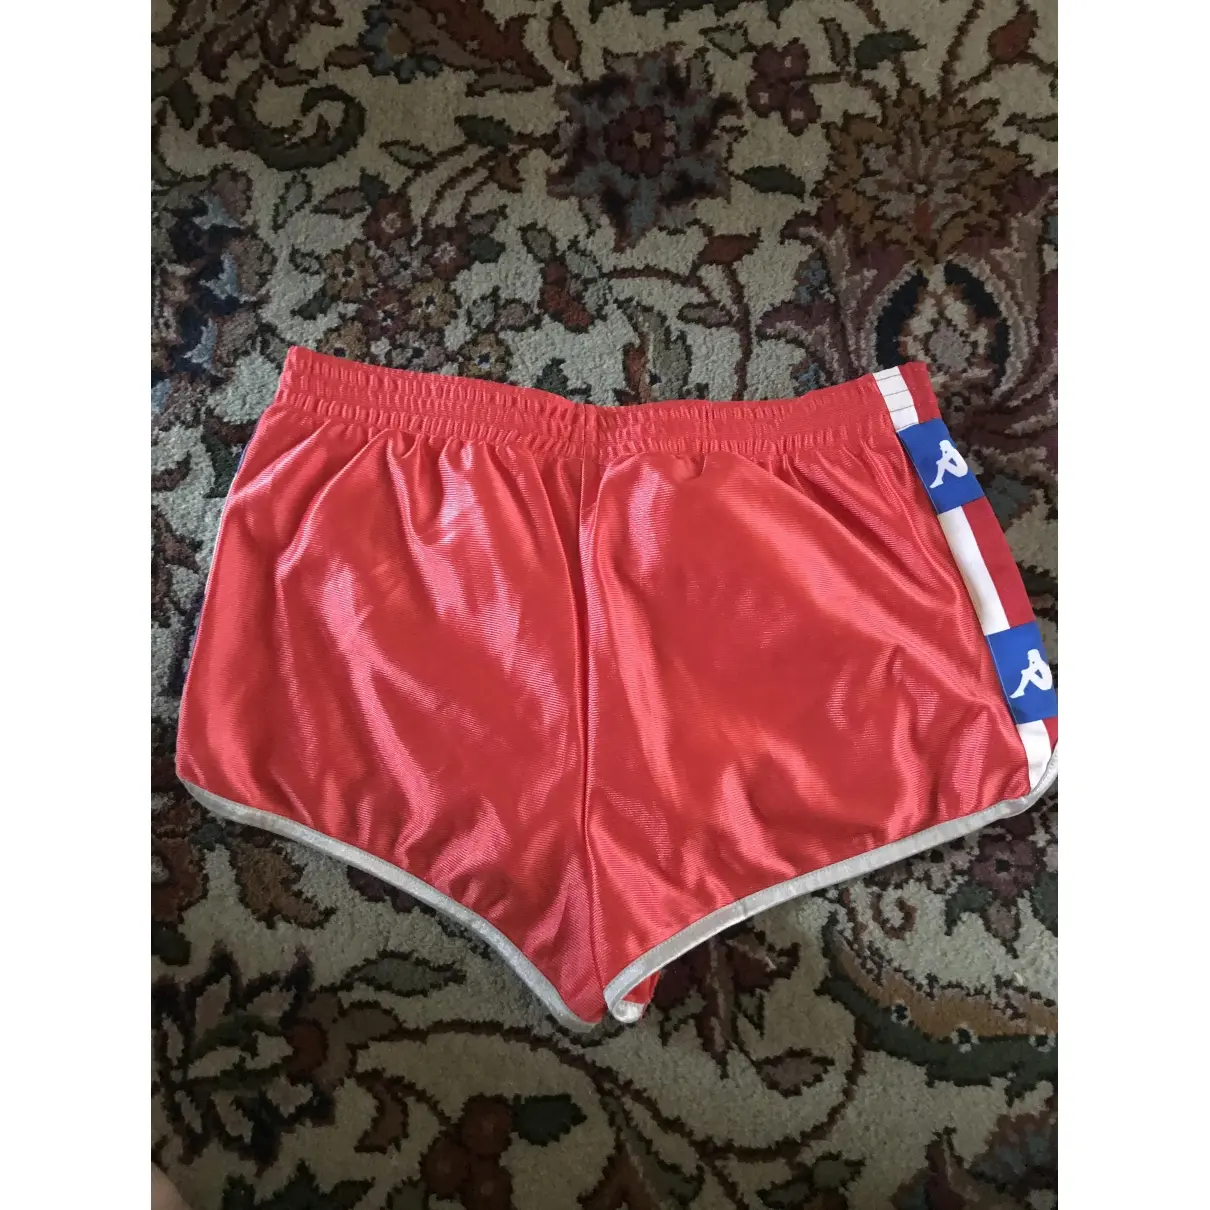 Buy Kappa Kontroll Red Polyester Shorts online